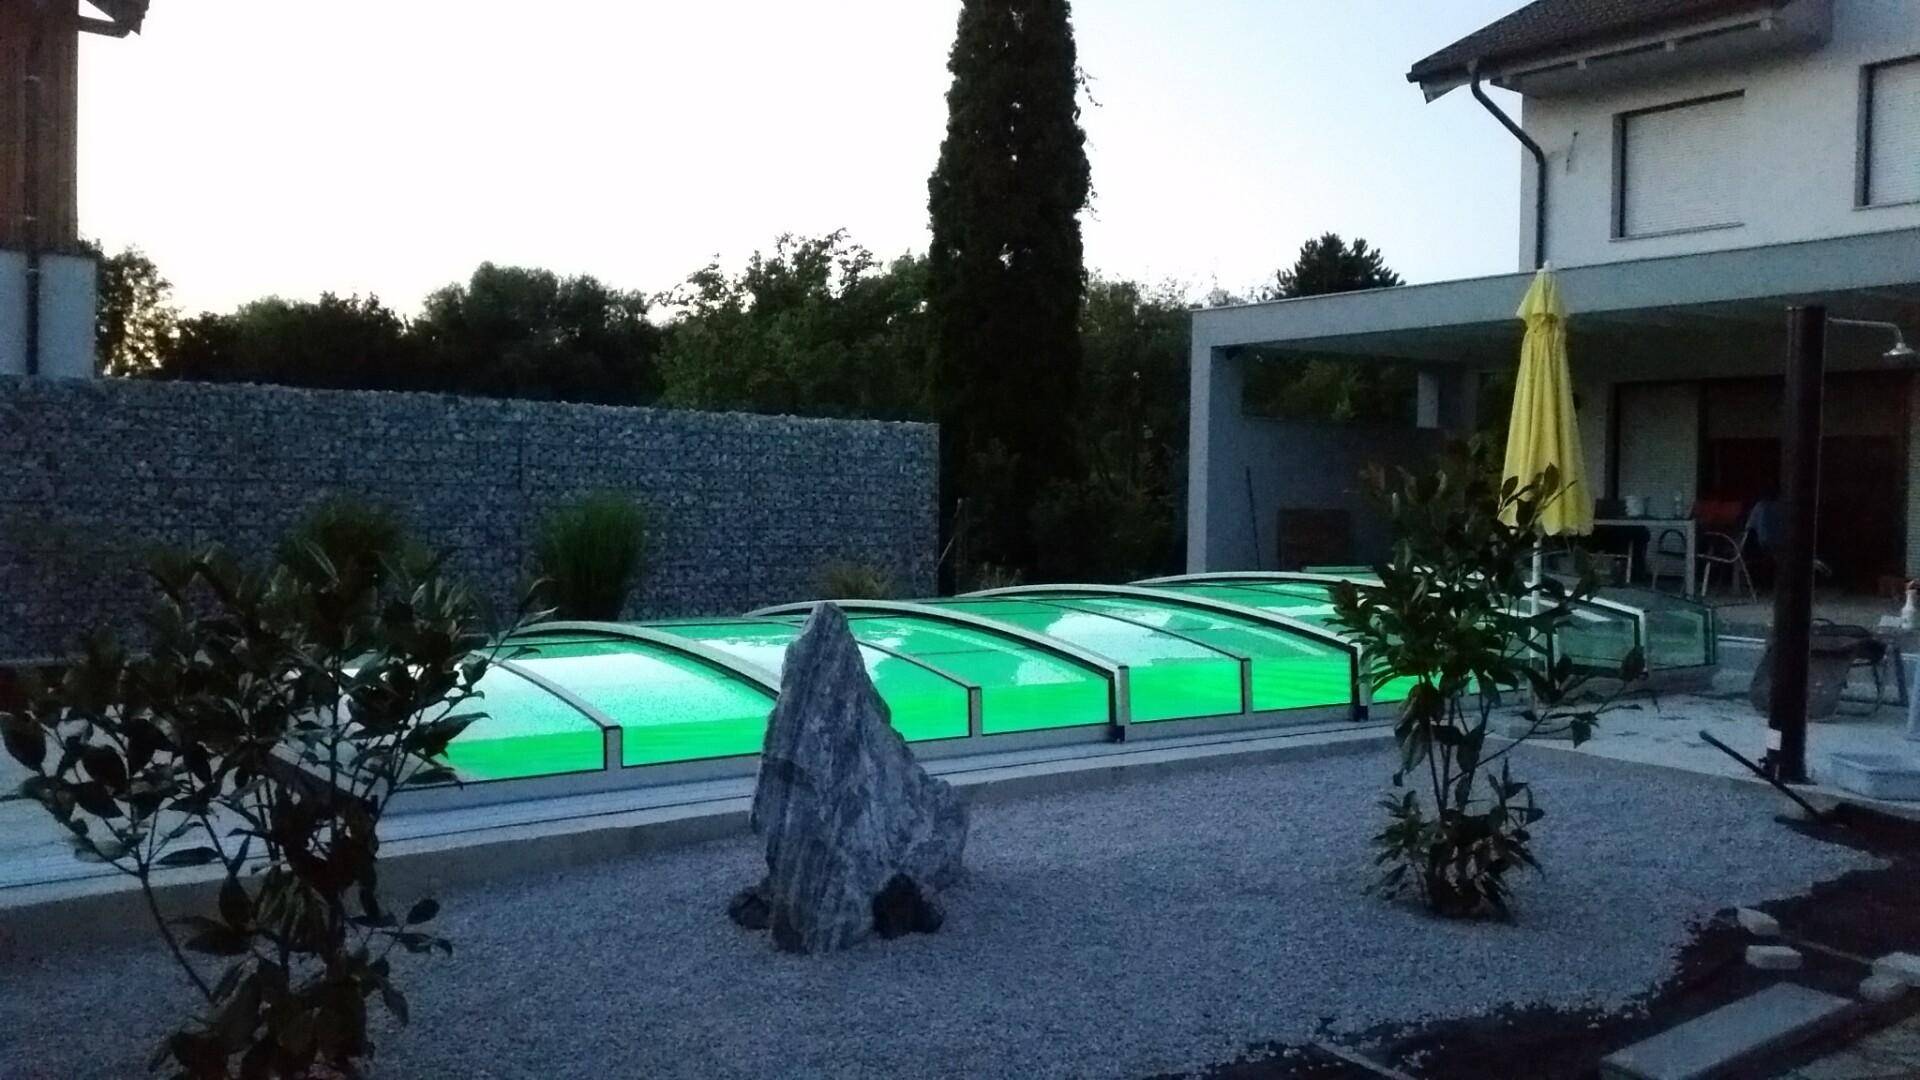 Pool mit Abdeckung